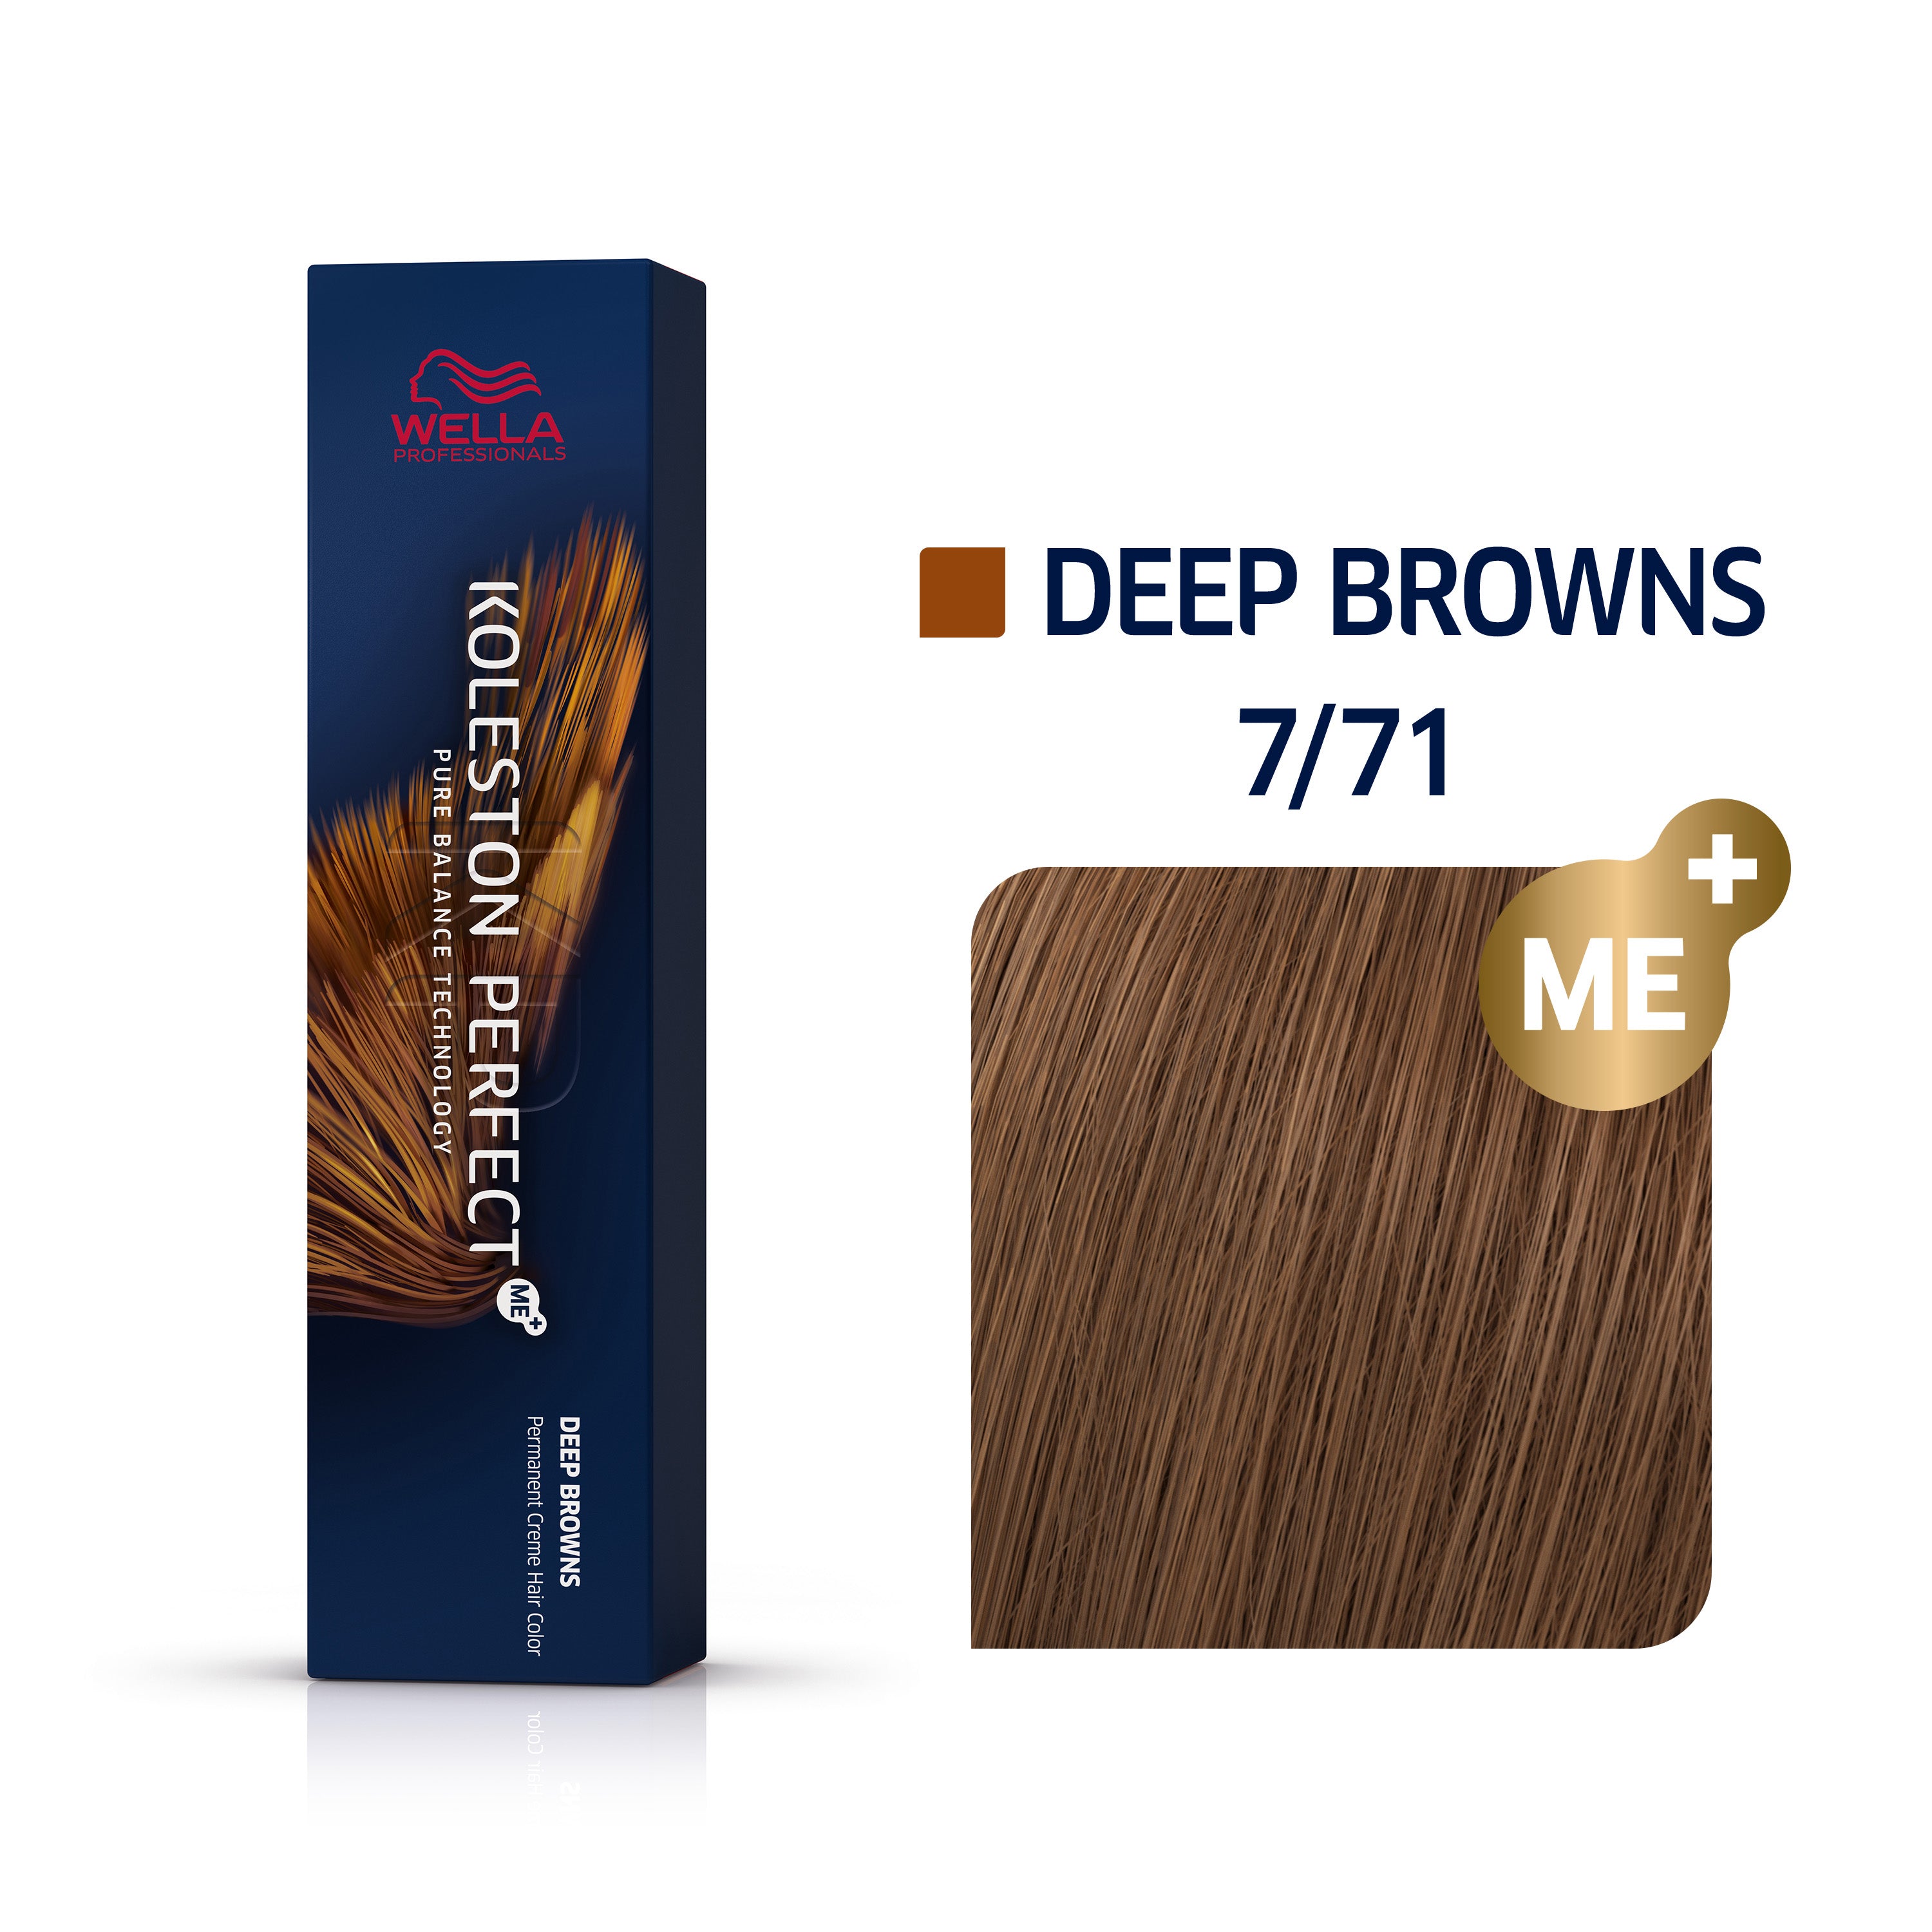 Wella Koleston Perfect Me+ Deep Browns 7/71 Medium Brunette - Ash Blonde